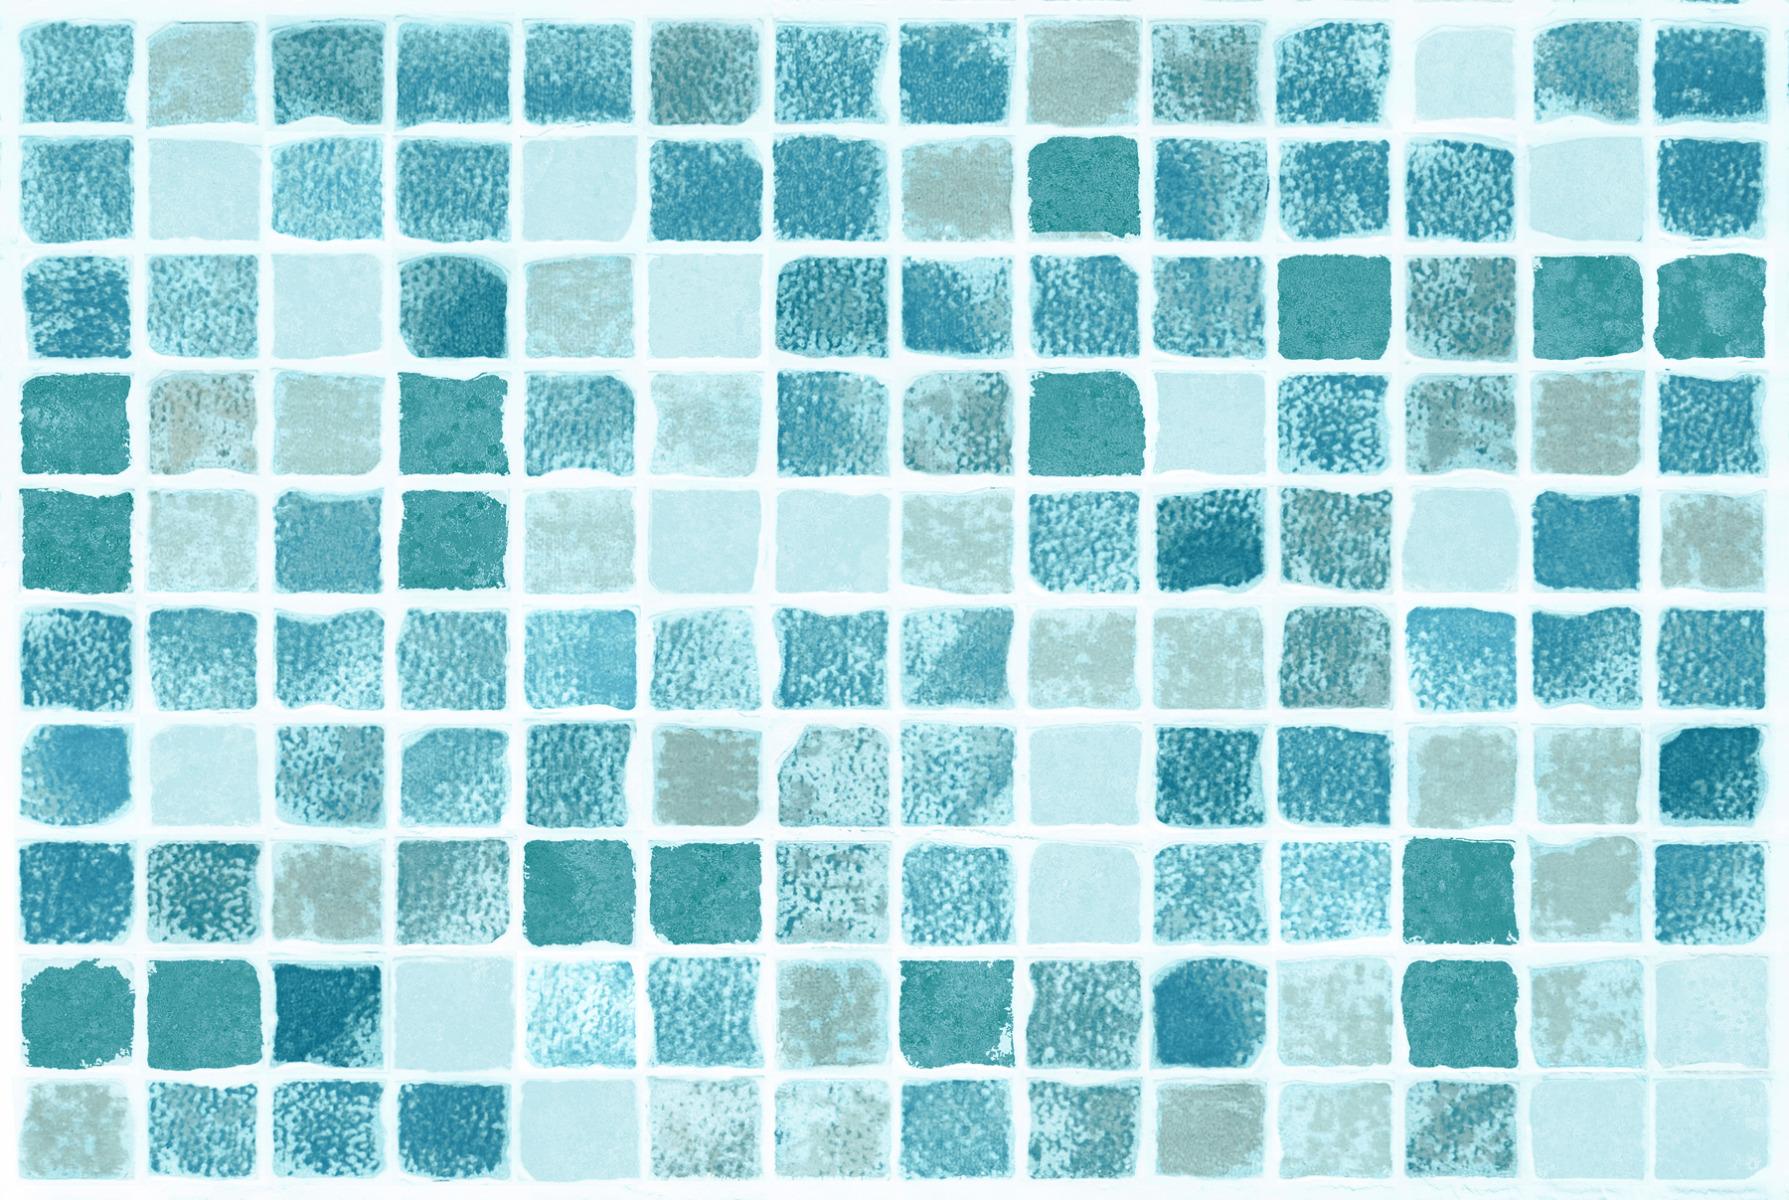 Sparkle Tiles Collection for Bathroom Tiles, Kitchen Tiles, Accent Tiles